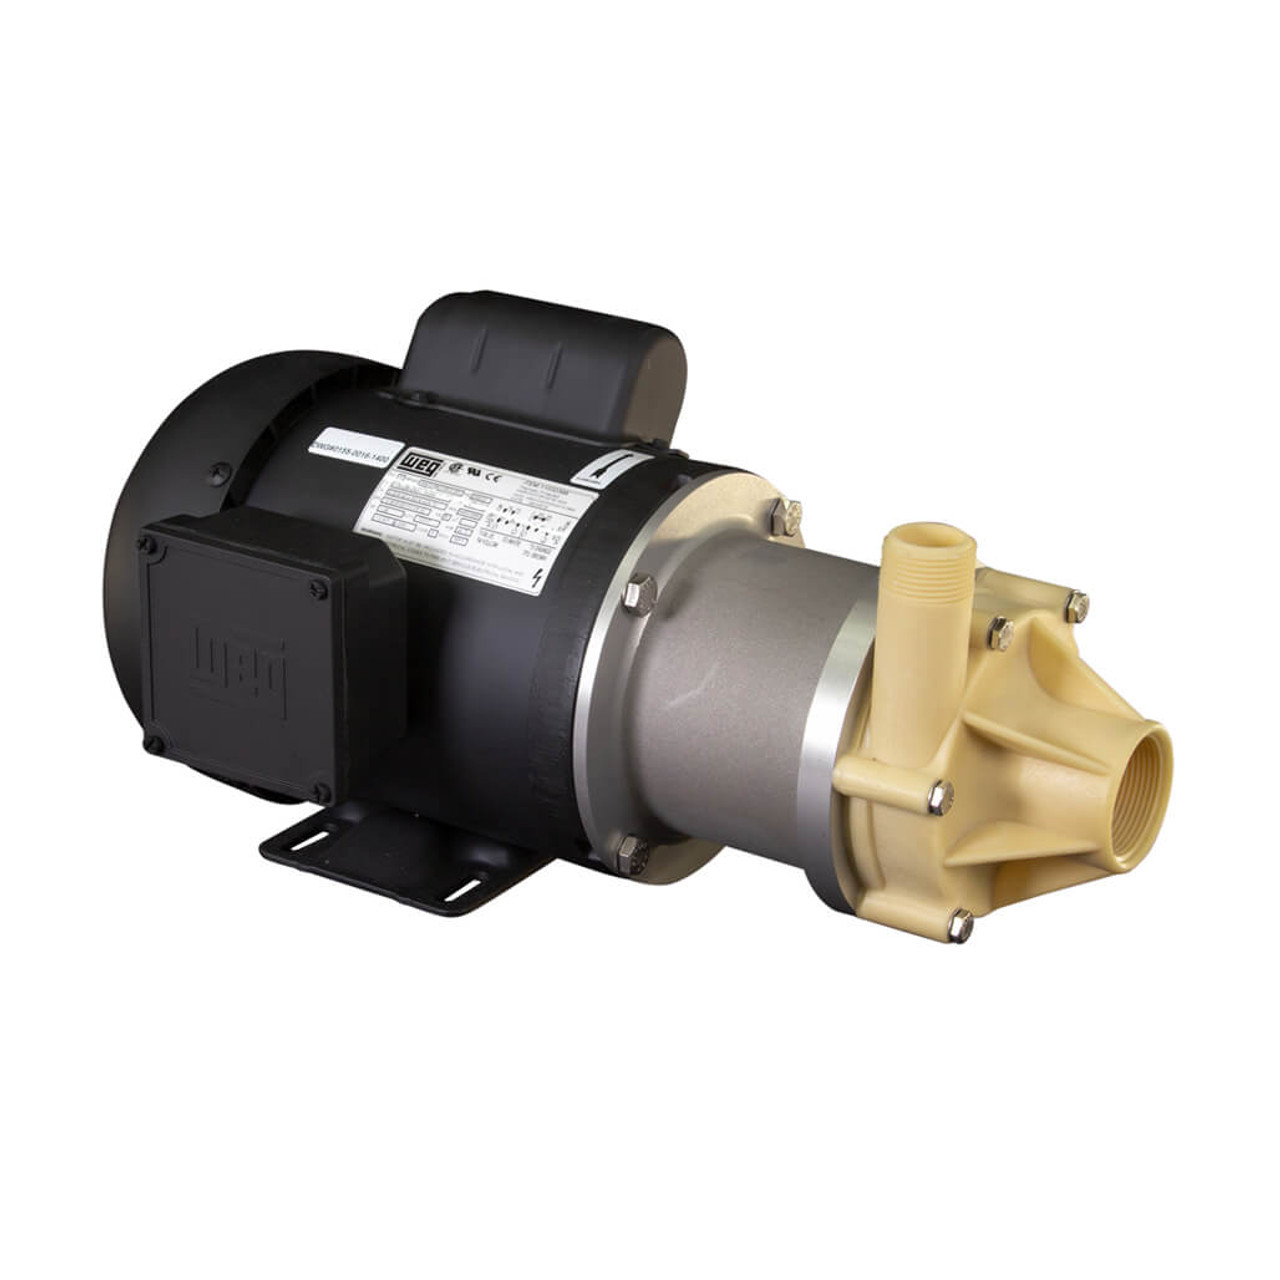 March Pumps - TE-7K-MD XP 1Ph 1HP AL Bkt Magnetic Drive Pump - 0155-0011-0800